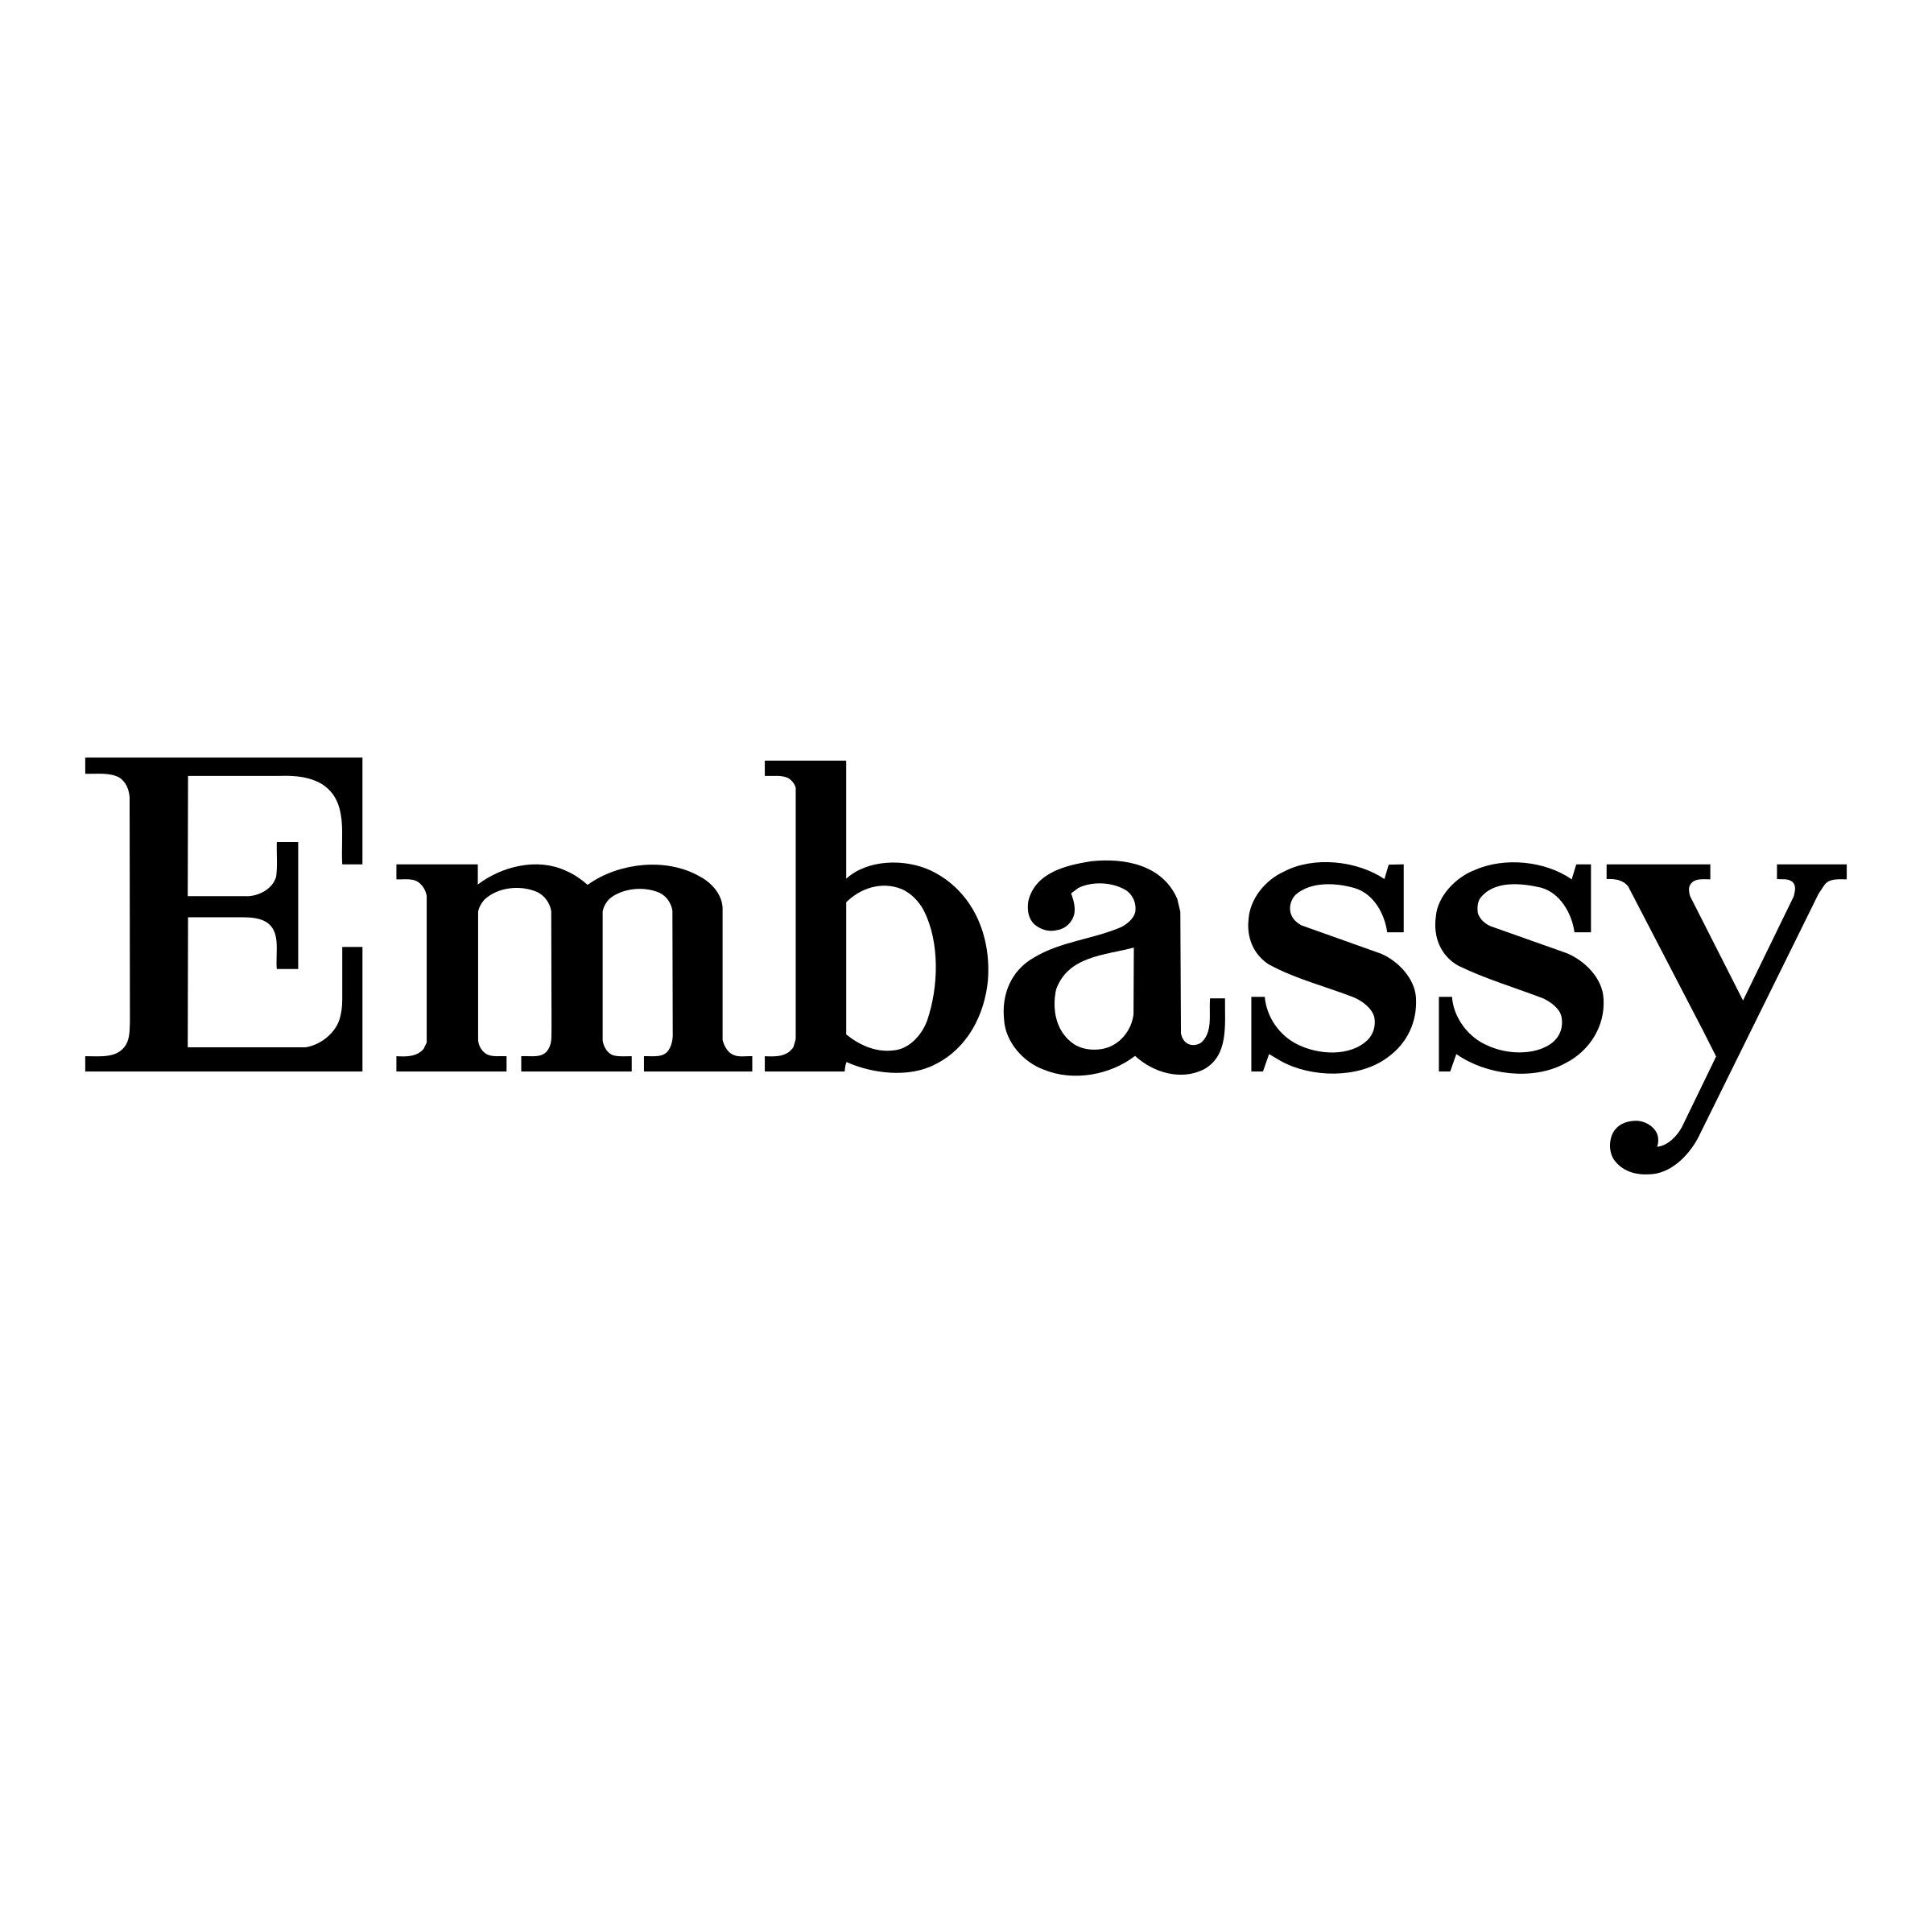 Embassy Logo - Embassy Logo PNG Transparent & SVG Vector - Freebie Supply